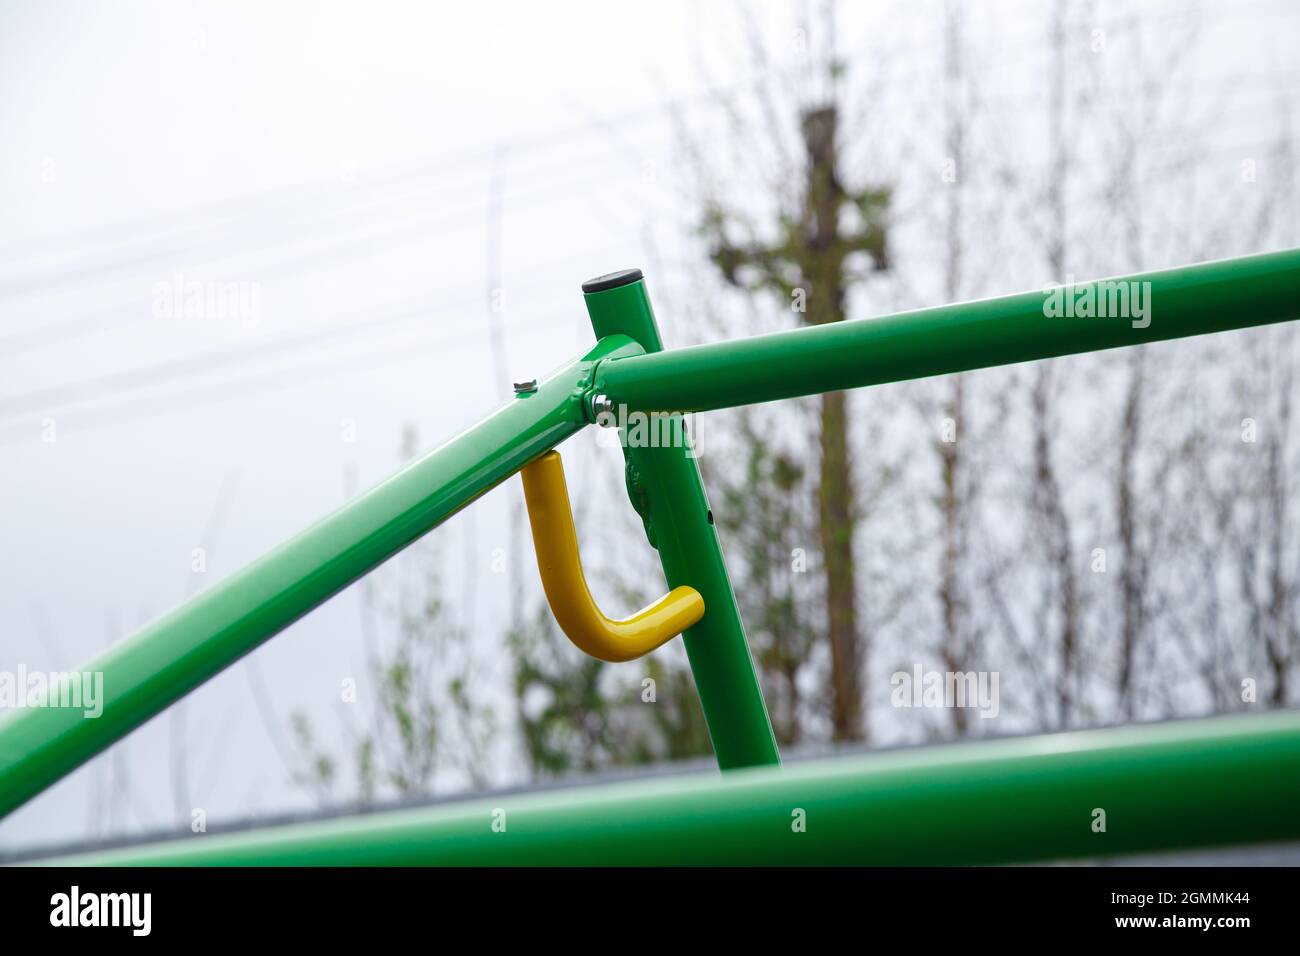 Image of iron details of playground on the ground Stock Photo